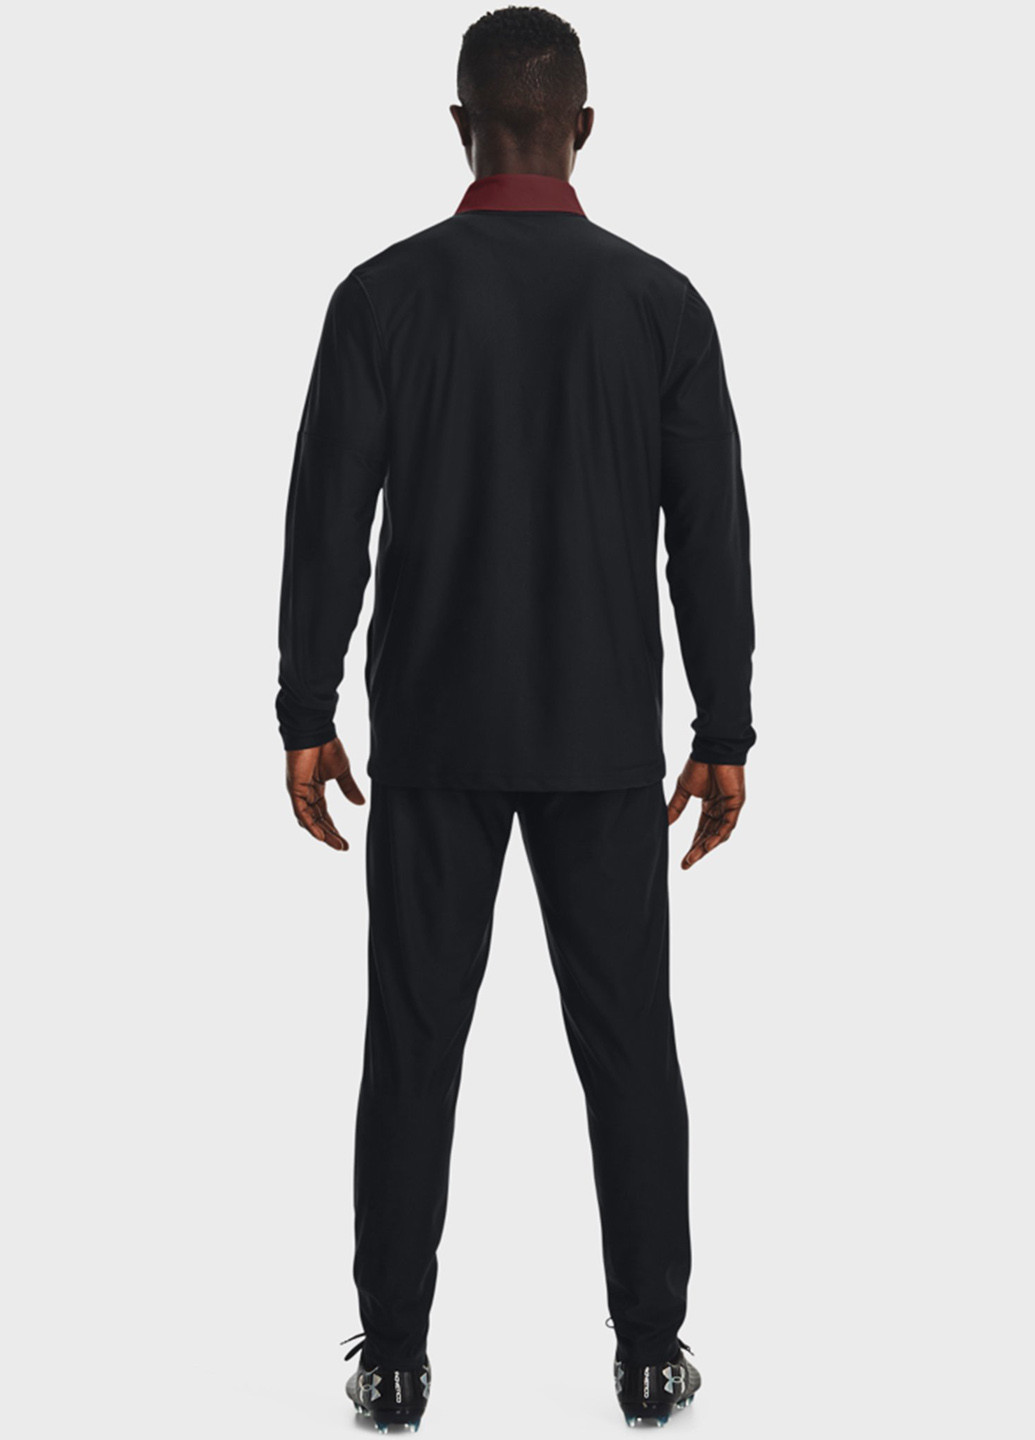 Костюм (кофта, брюки) Under Armour логотип чёрный спортивный полиэстер, трикотаж